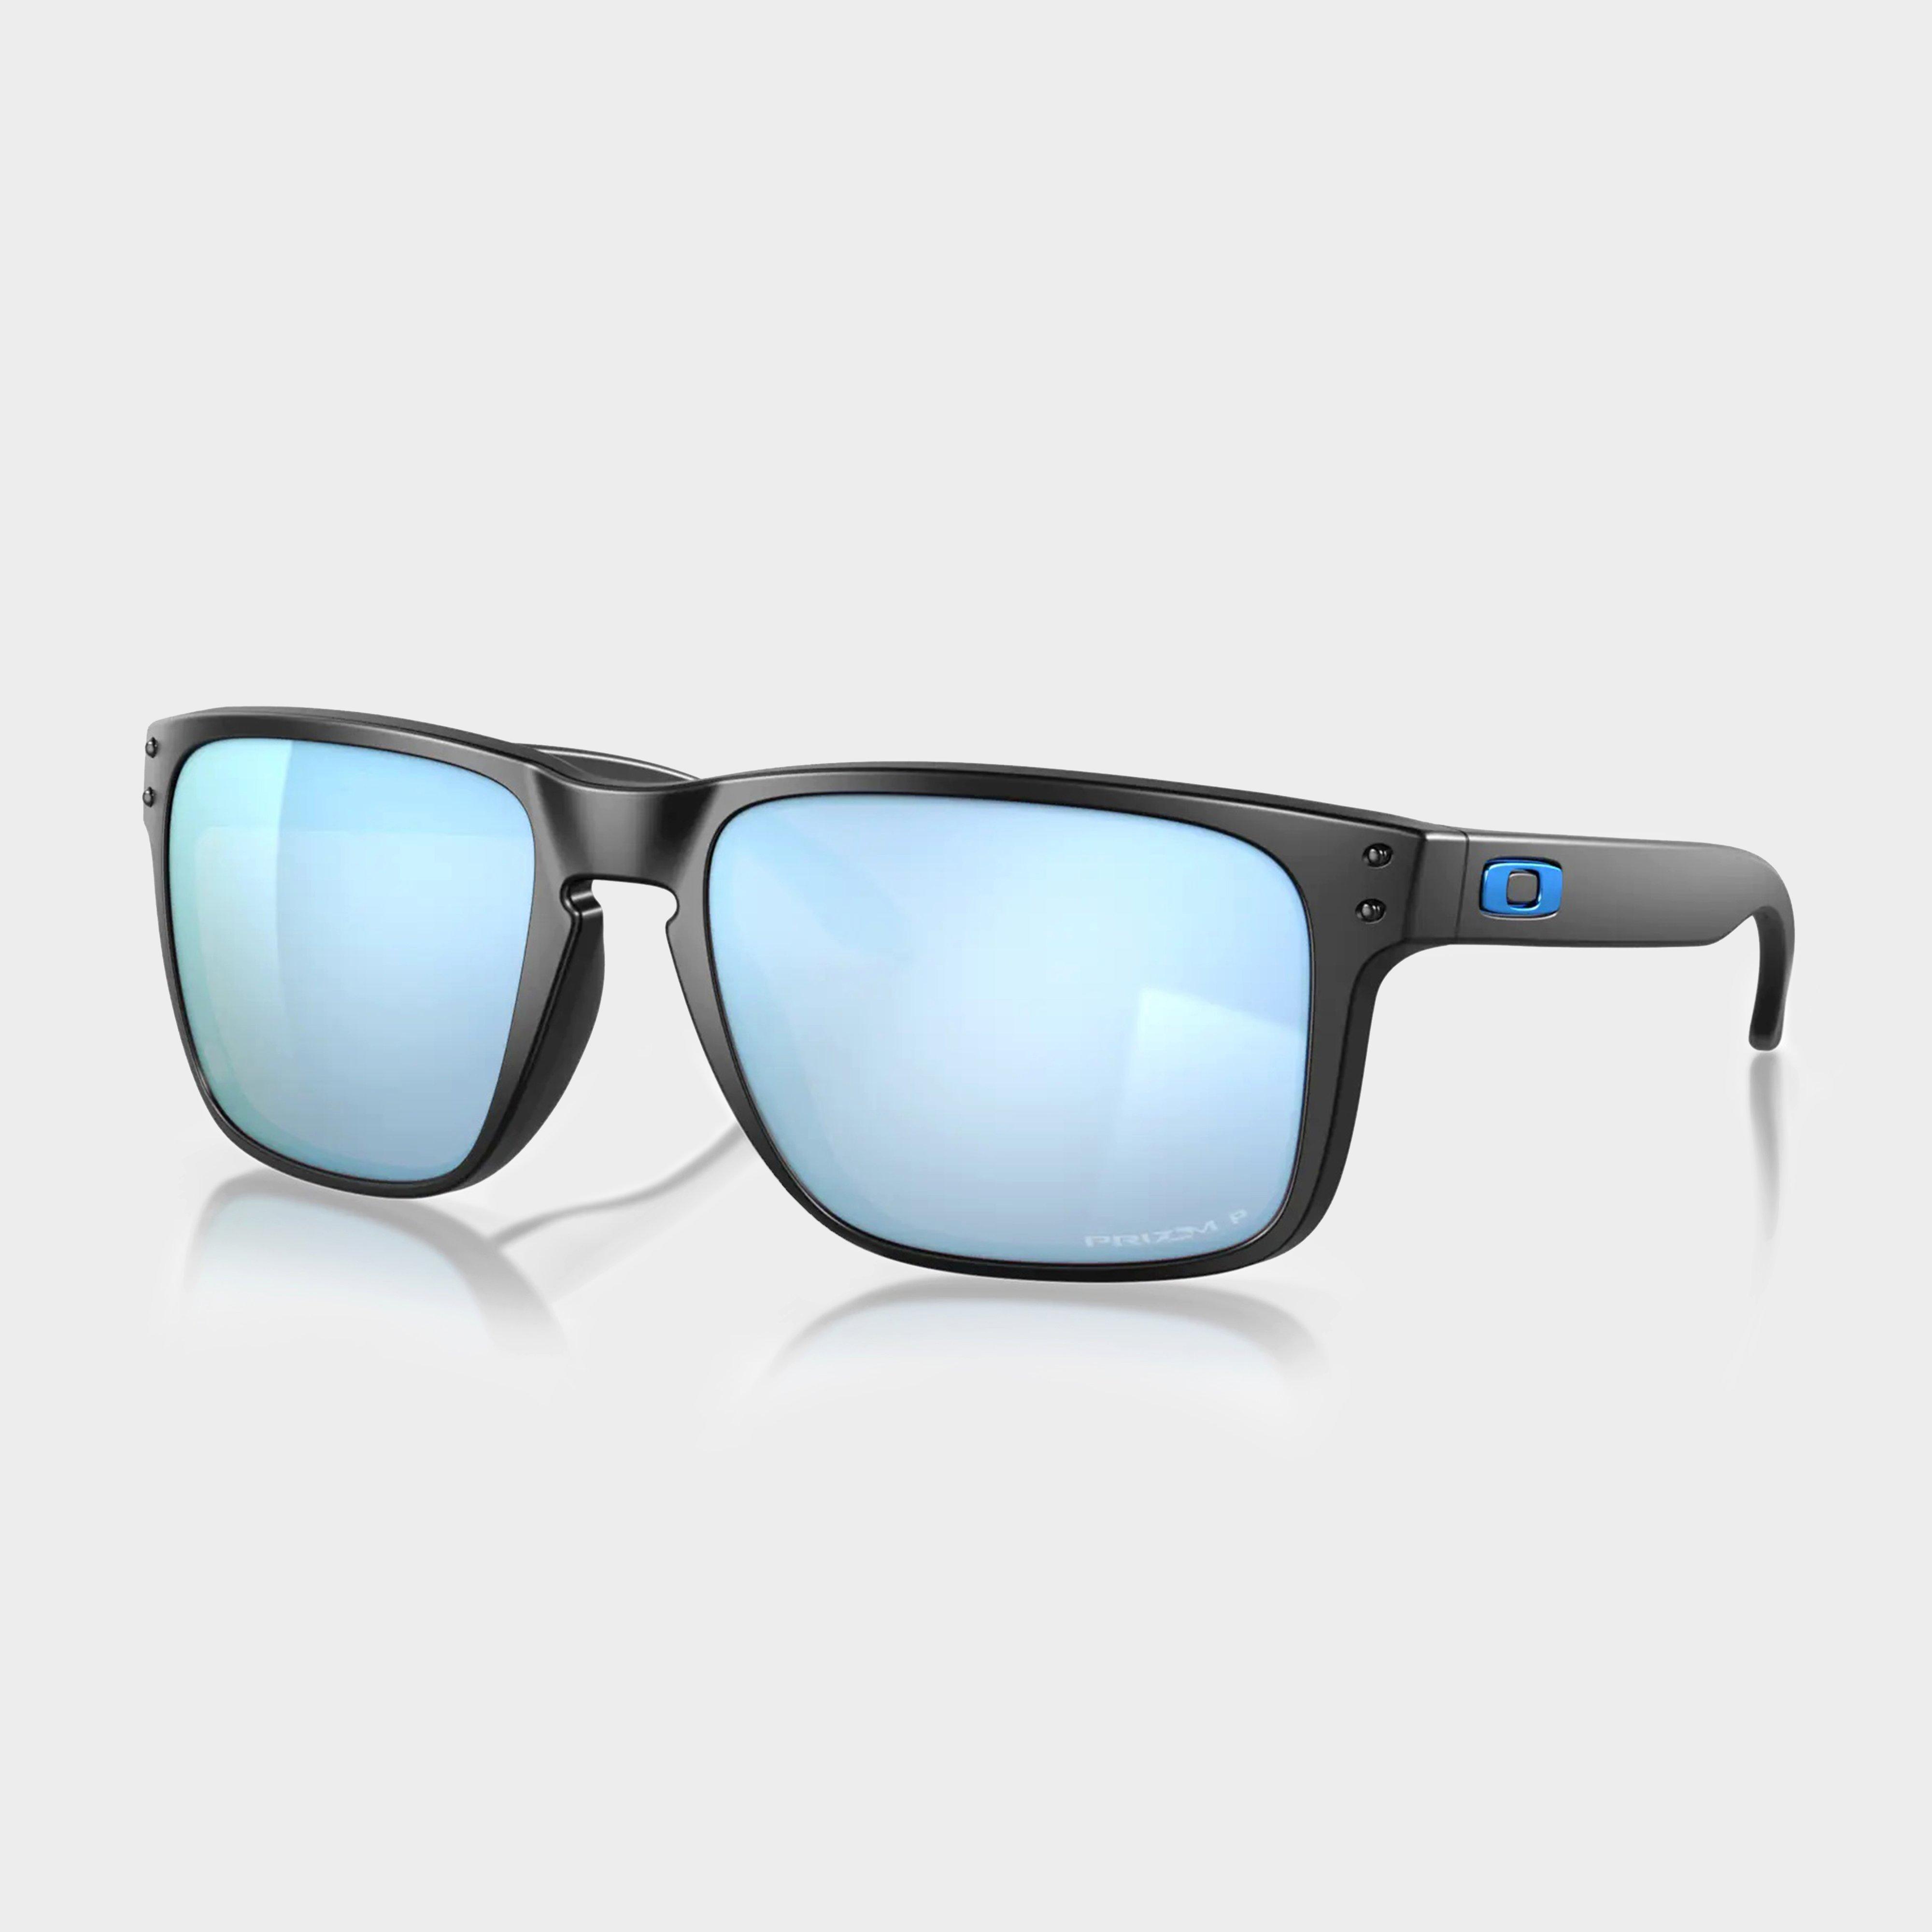  Oakley Holbrook Sunglasses XL, Black